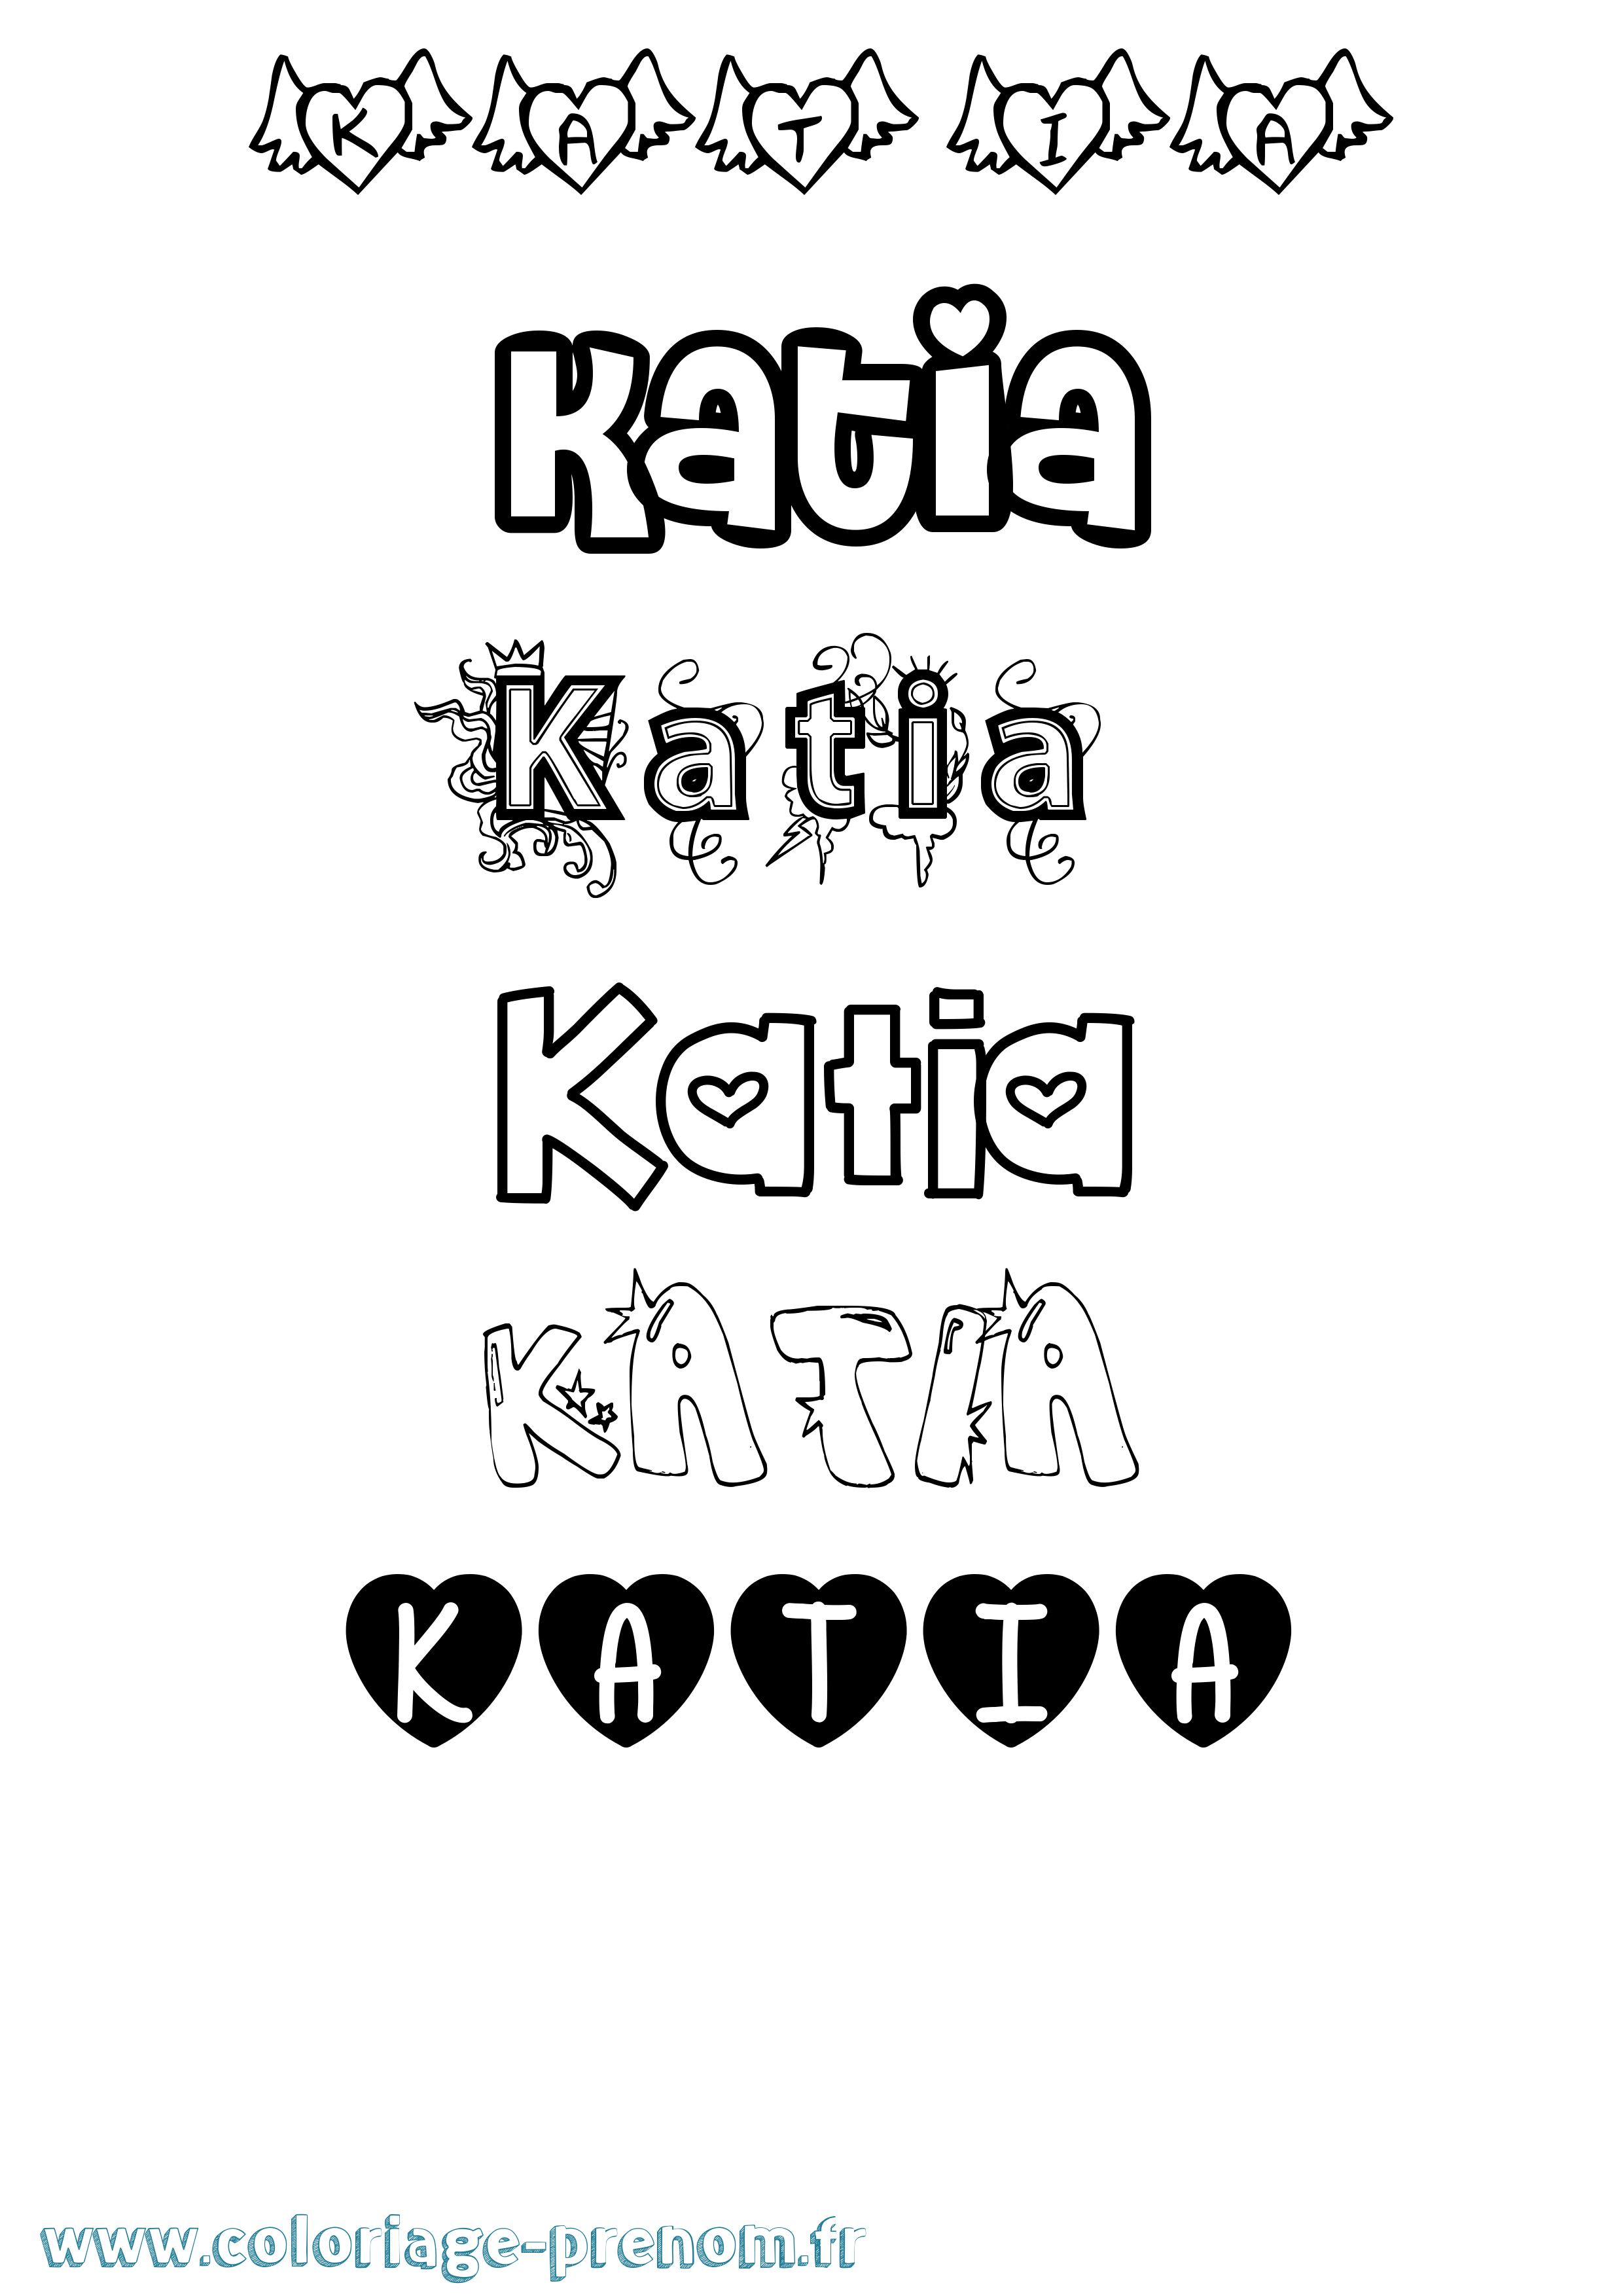 Coloriage prénom Katia